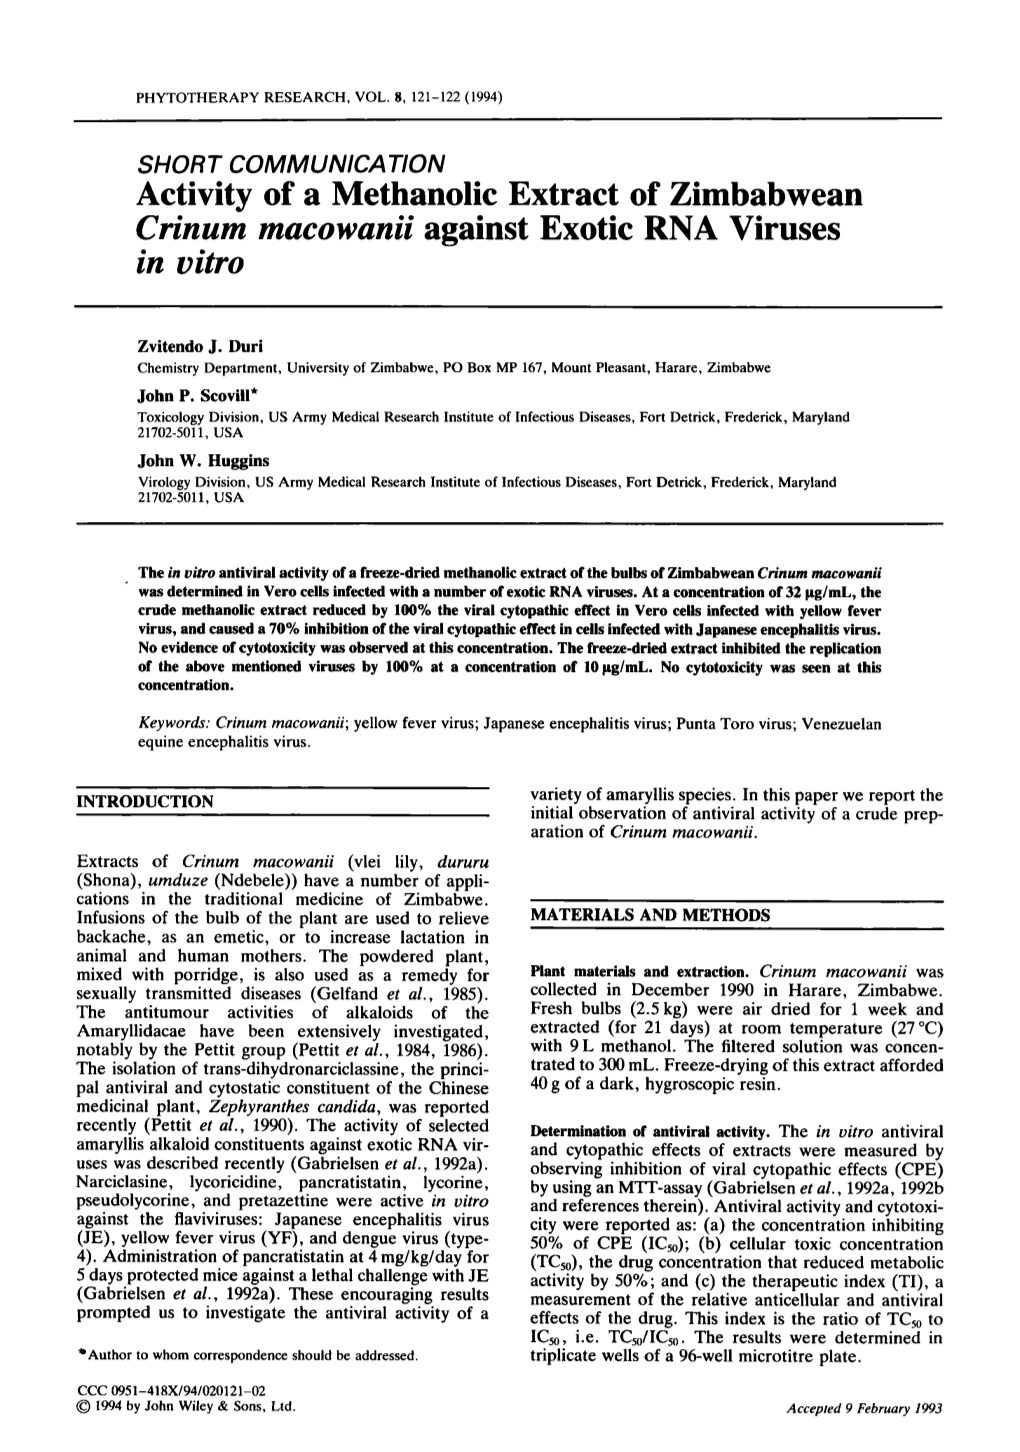 Activity of a Methanolic Extract of Zimbabwean Crinum Macowanii Against Exotic RNA Viruses in Vitro